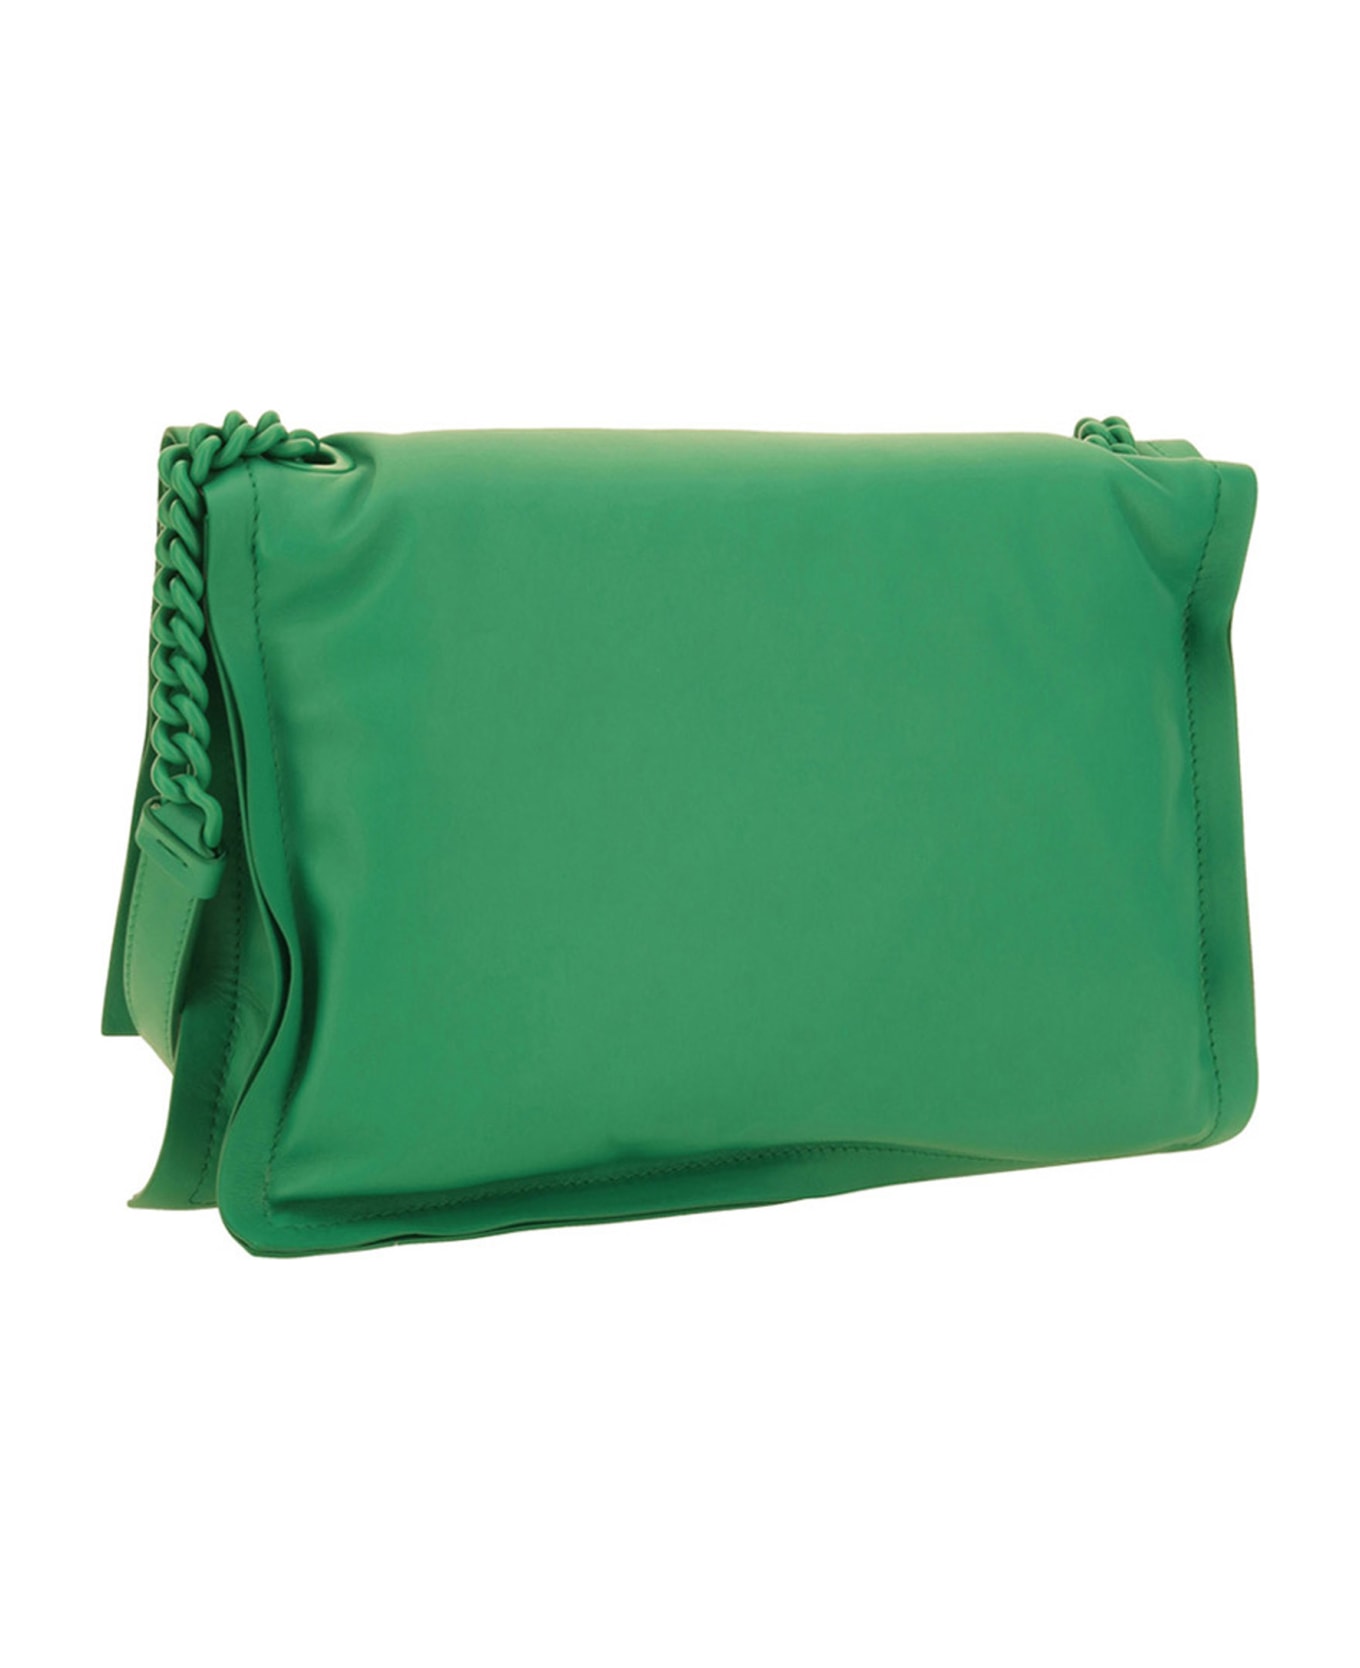 Ferragamo Viva Bow Leather Crossbody Bag - Green